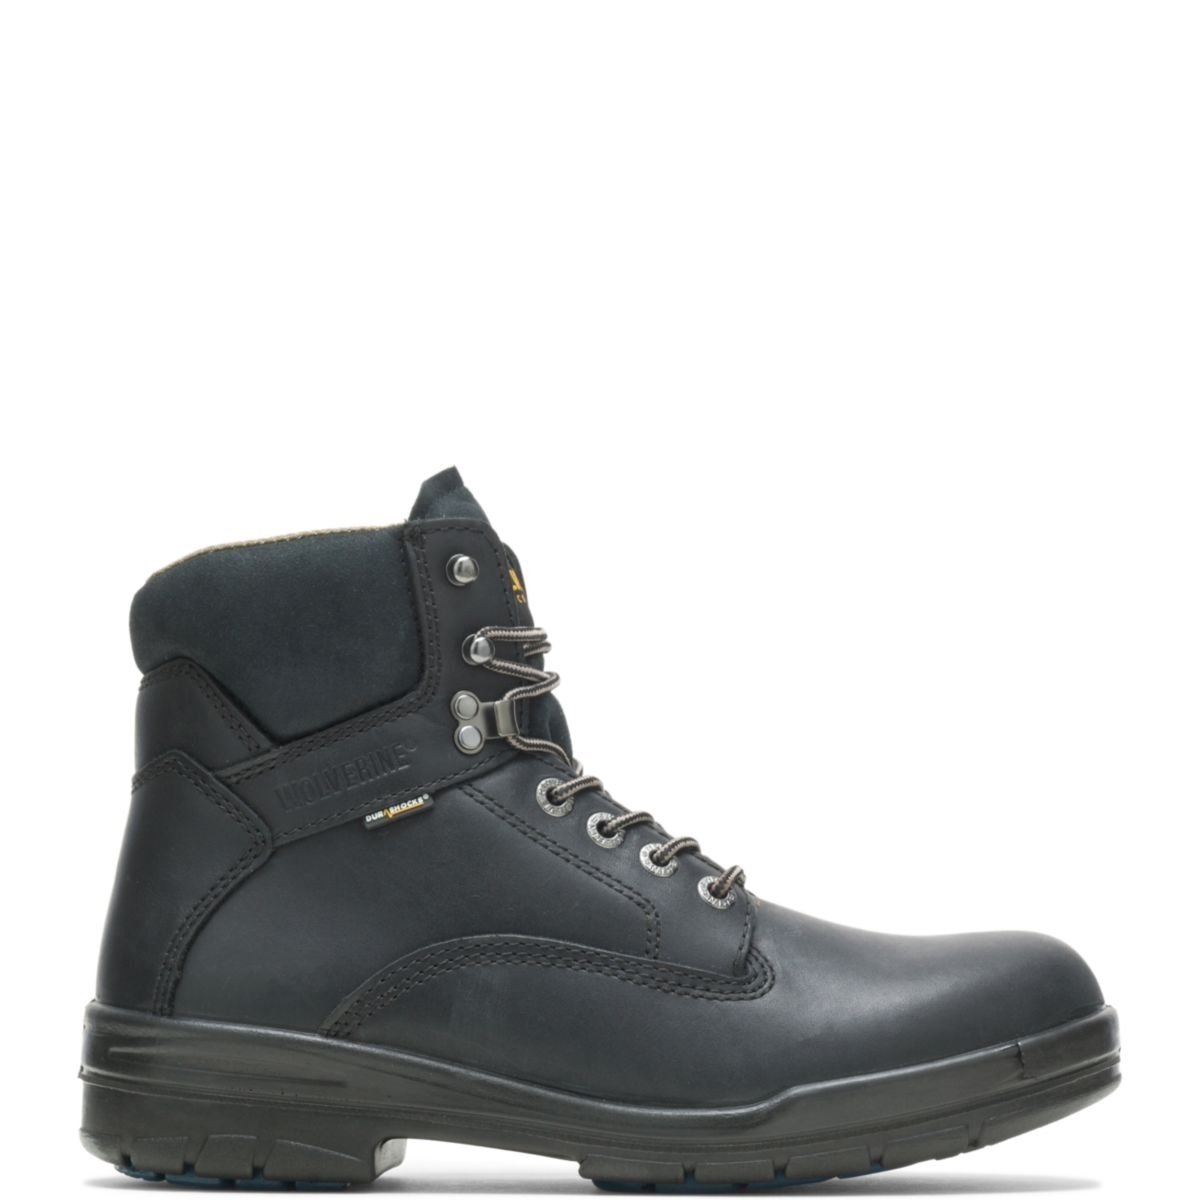 WOLVERINE Men's 6 DuraShocksÂ® Slip Resistant Direct-Attached Lined Soft Toe Work Boot Black - W03123 14 WIDE BLACK - BLACK, 10 Wide